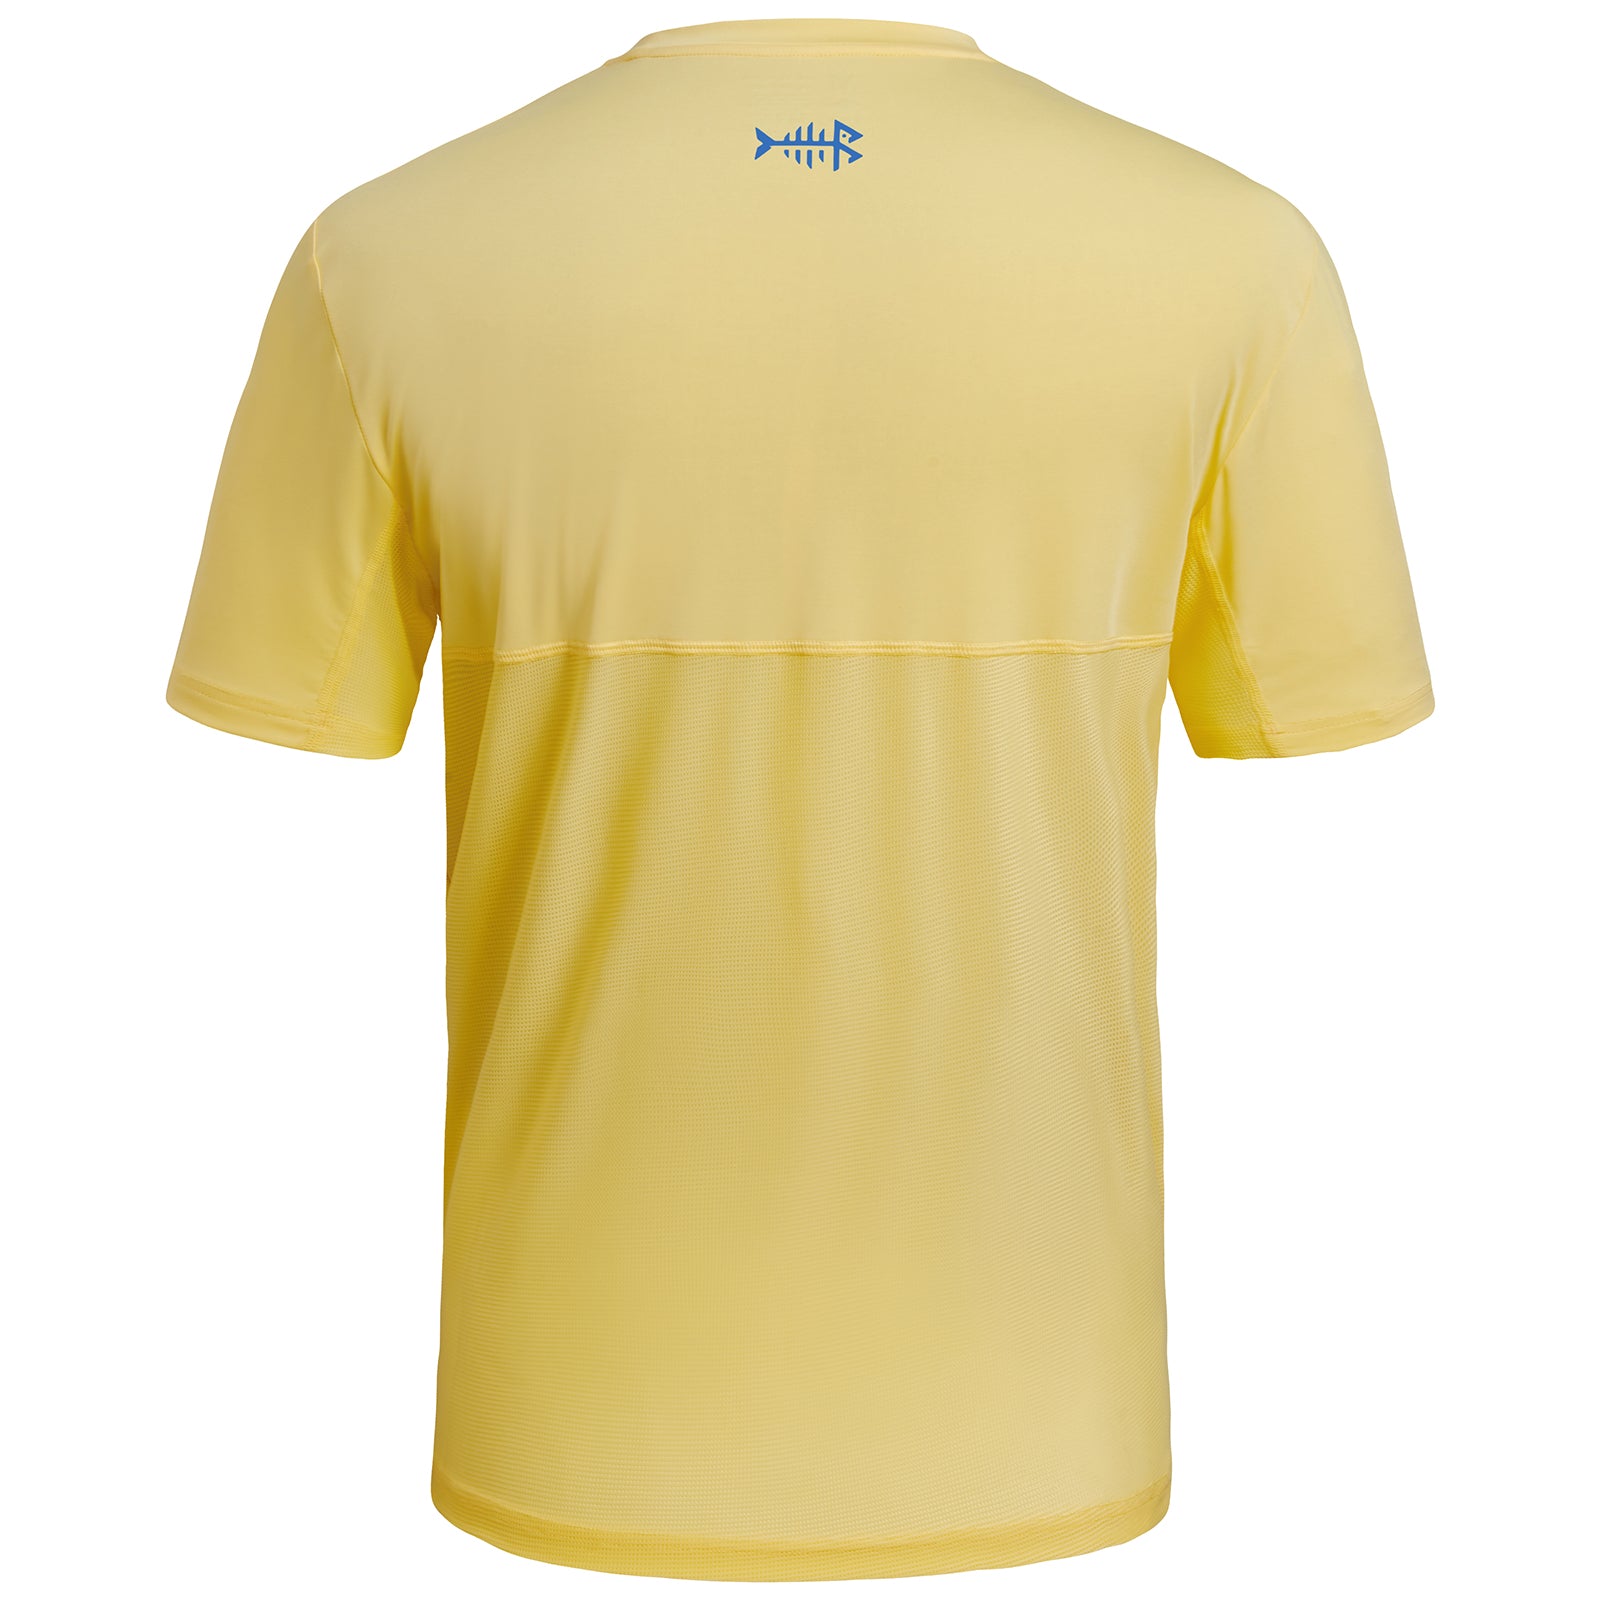 Palmyth Fishing Shirt for Men Long Sleeve Sun Protection UV UPF 50+  T-Shirts with Pocket